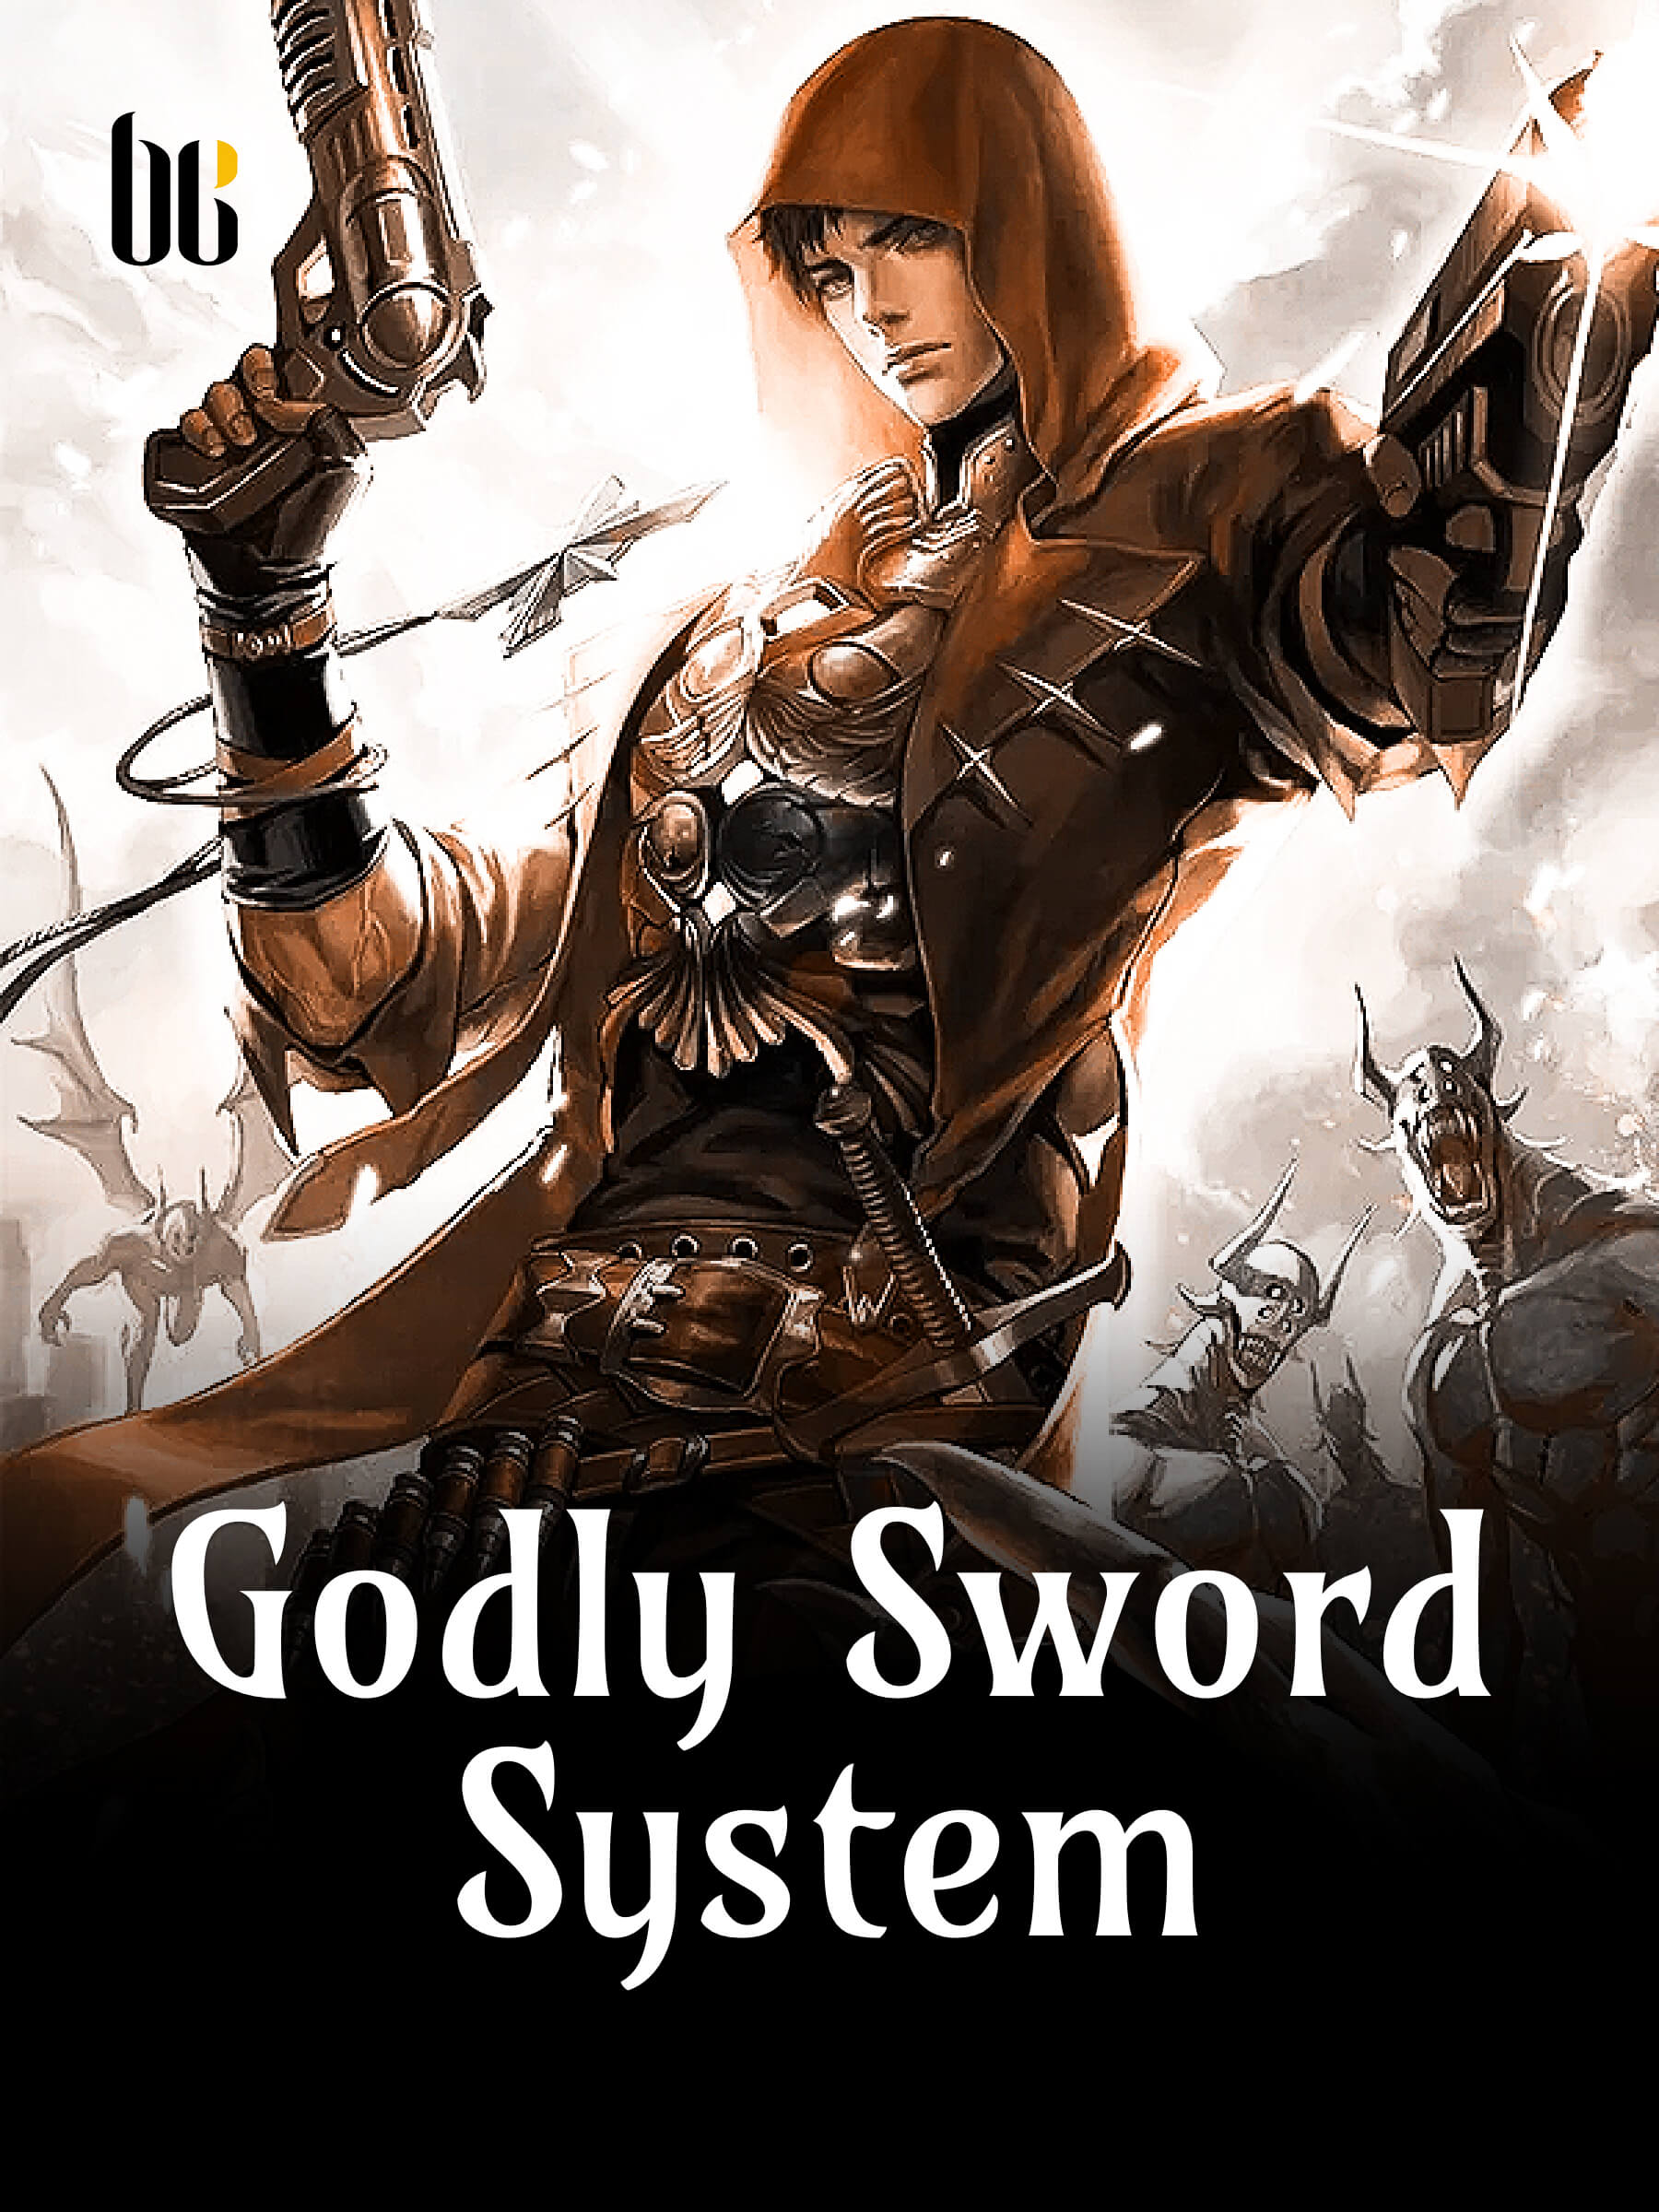 Godly Sword System